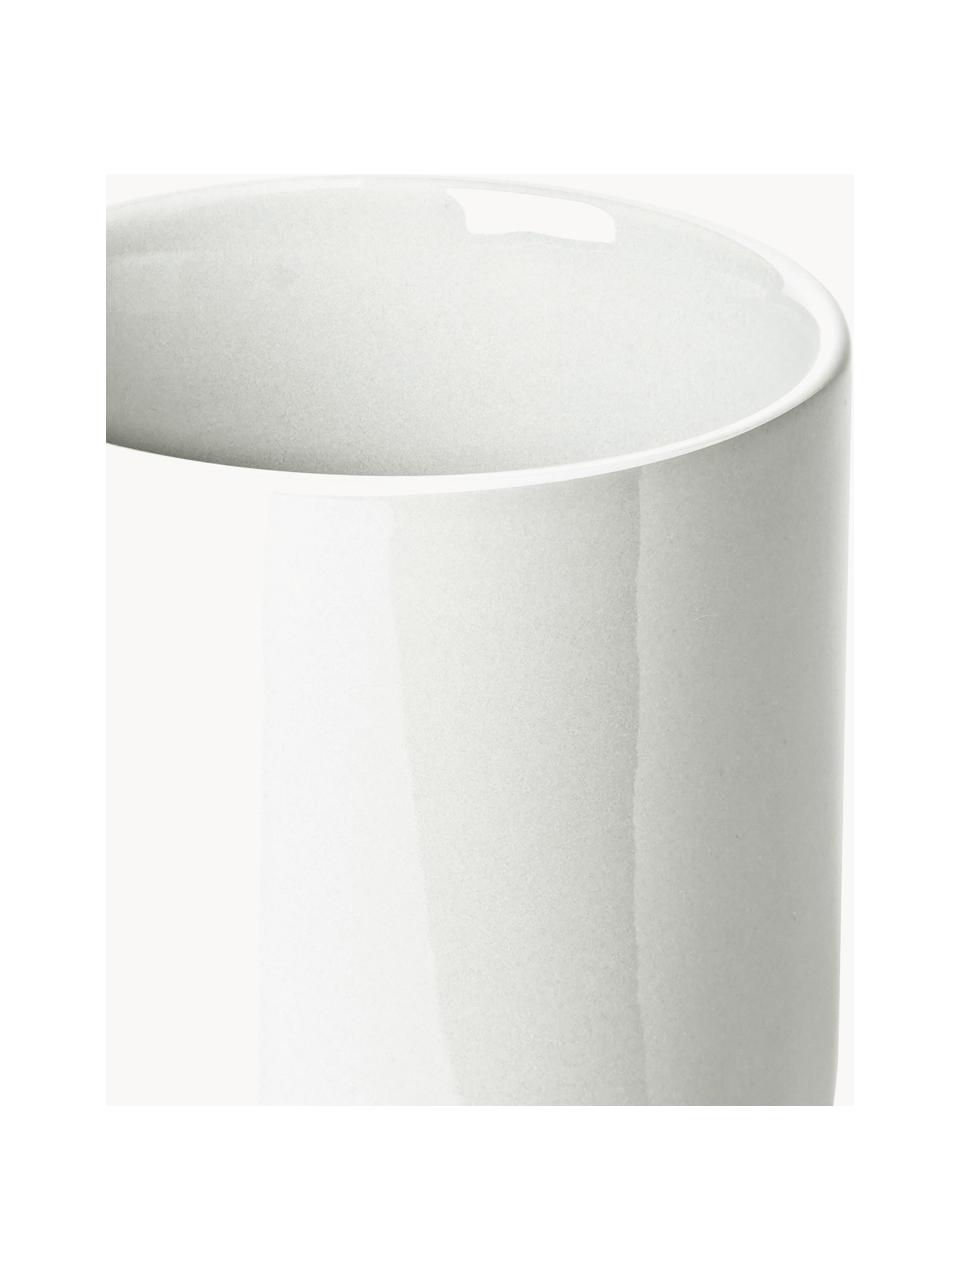 Porseleinen koffiemokken Nessa, 4 stuks, Hoogwaardig hard porselein, geglazuurd, Gebroken wit, glanzend, Ø 8 x H 10 cm, 200 ml